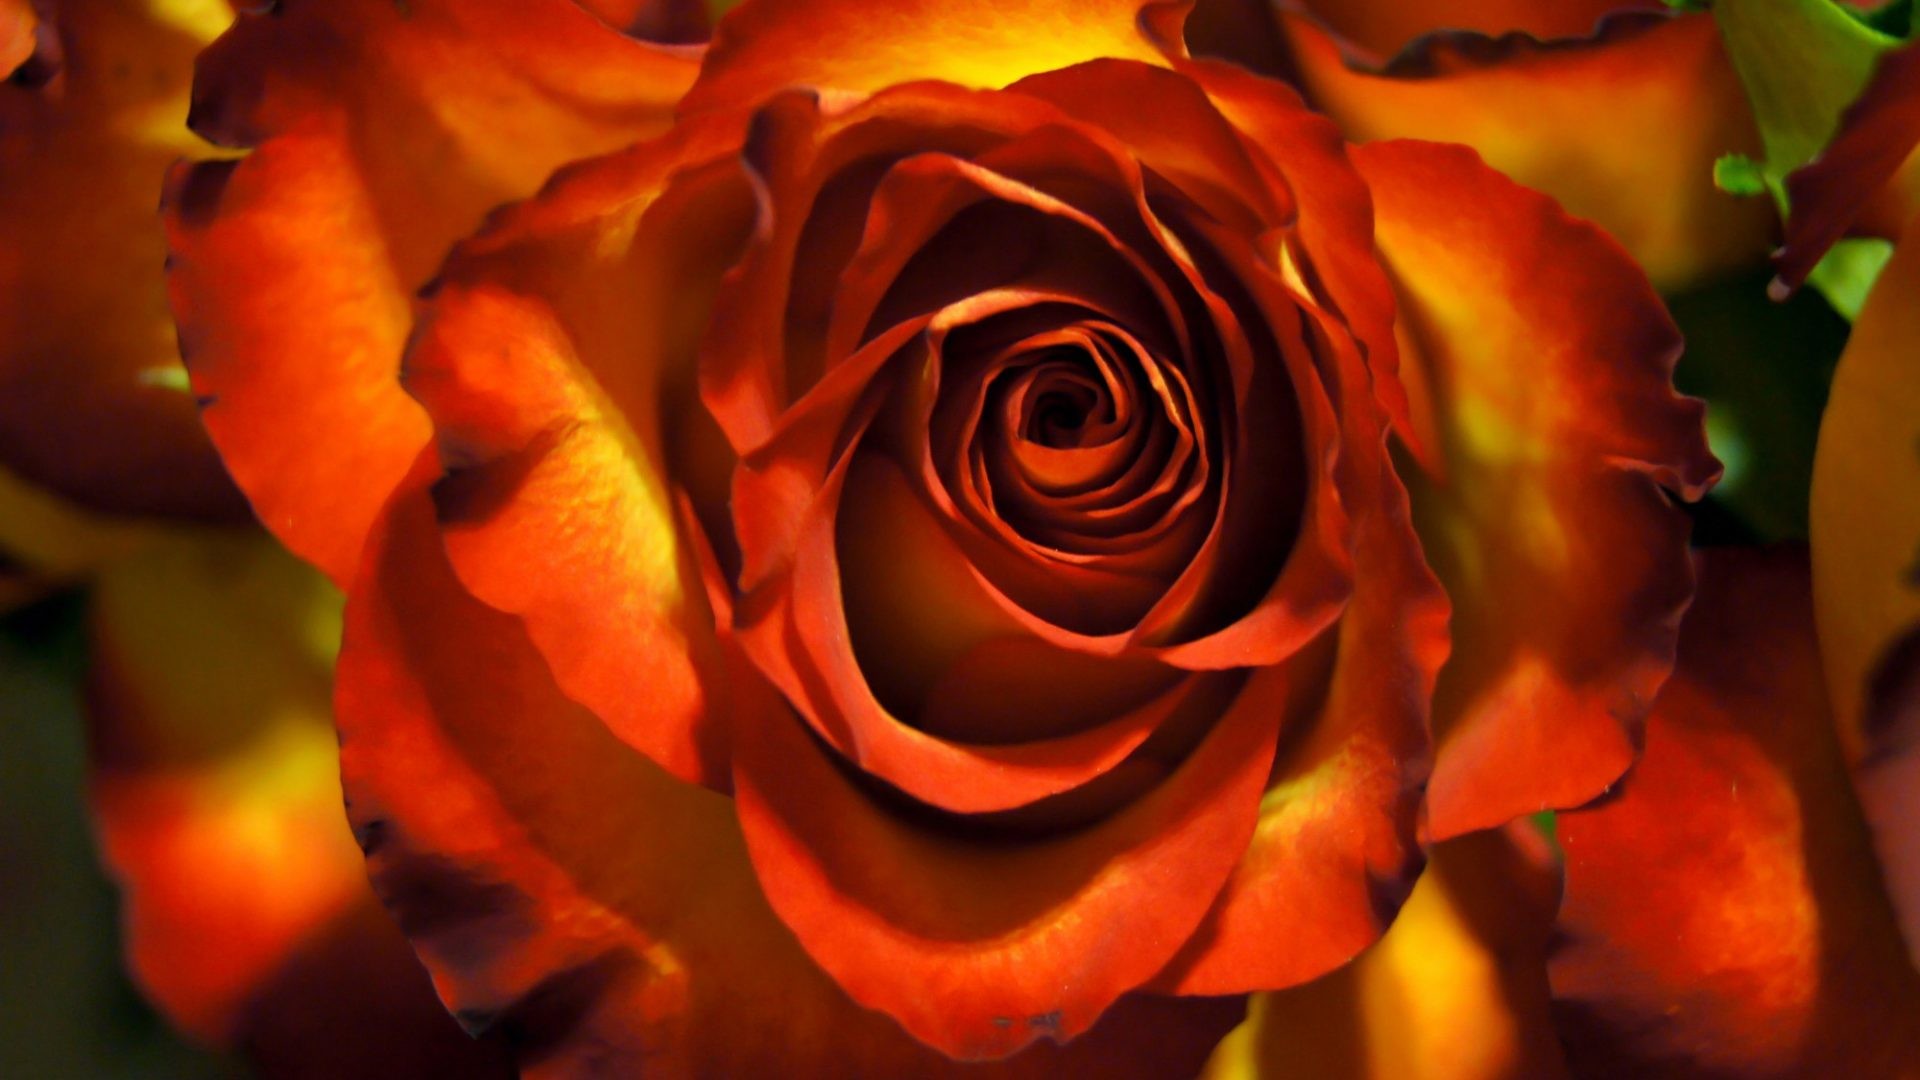 1920x1080 Rose Tag - Rose Flower Golden Beautiful Orange Nature Bronze Lovely Petals  Single Desktop Wallpaper for